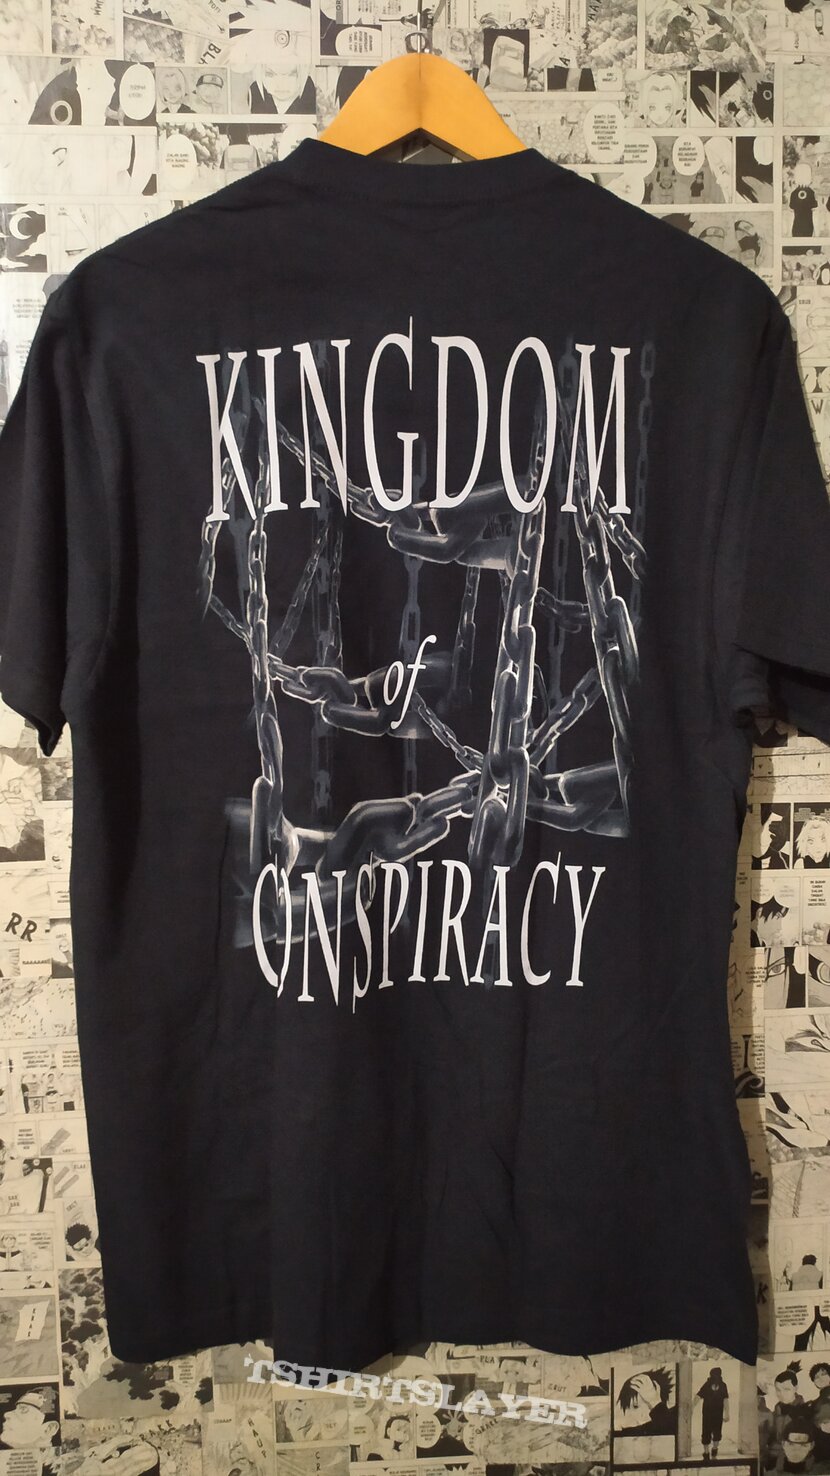 Immolation-kingdom of conspiracy